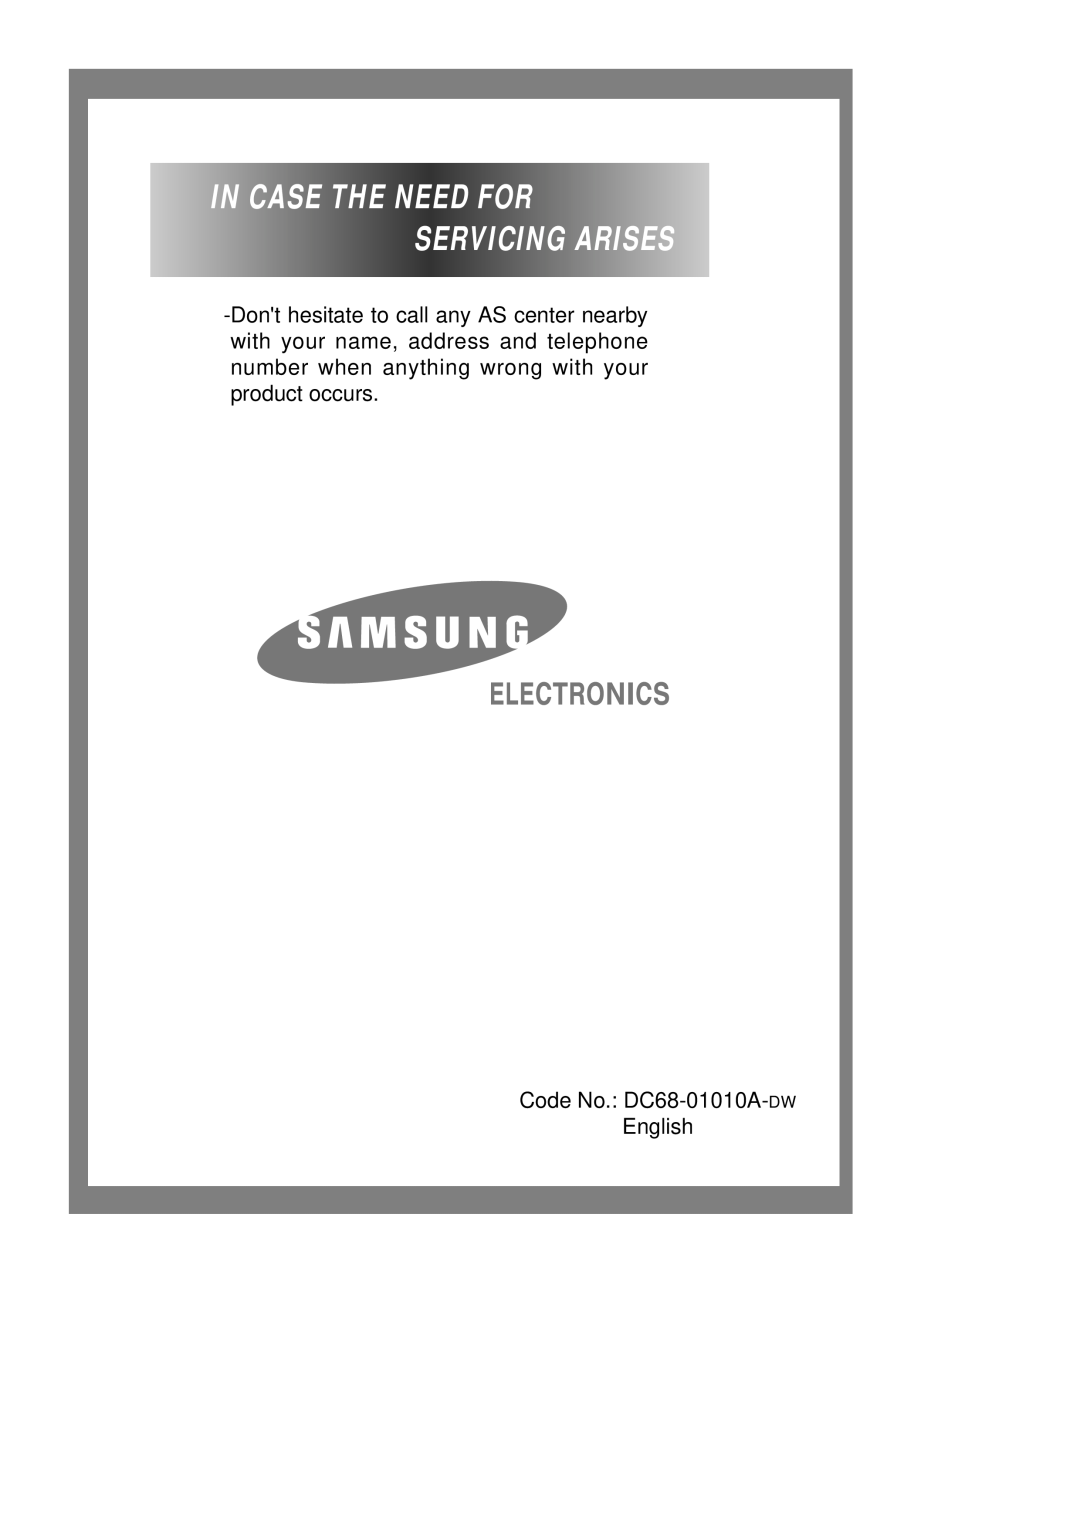 Samsung S1005J, S1003J, S803J, S805J manual In Case The Need For Servicing Arises, Code No. DC68-01010A-DW English 